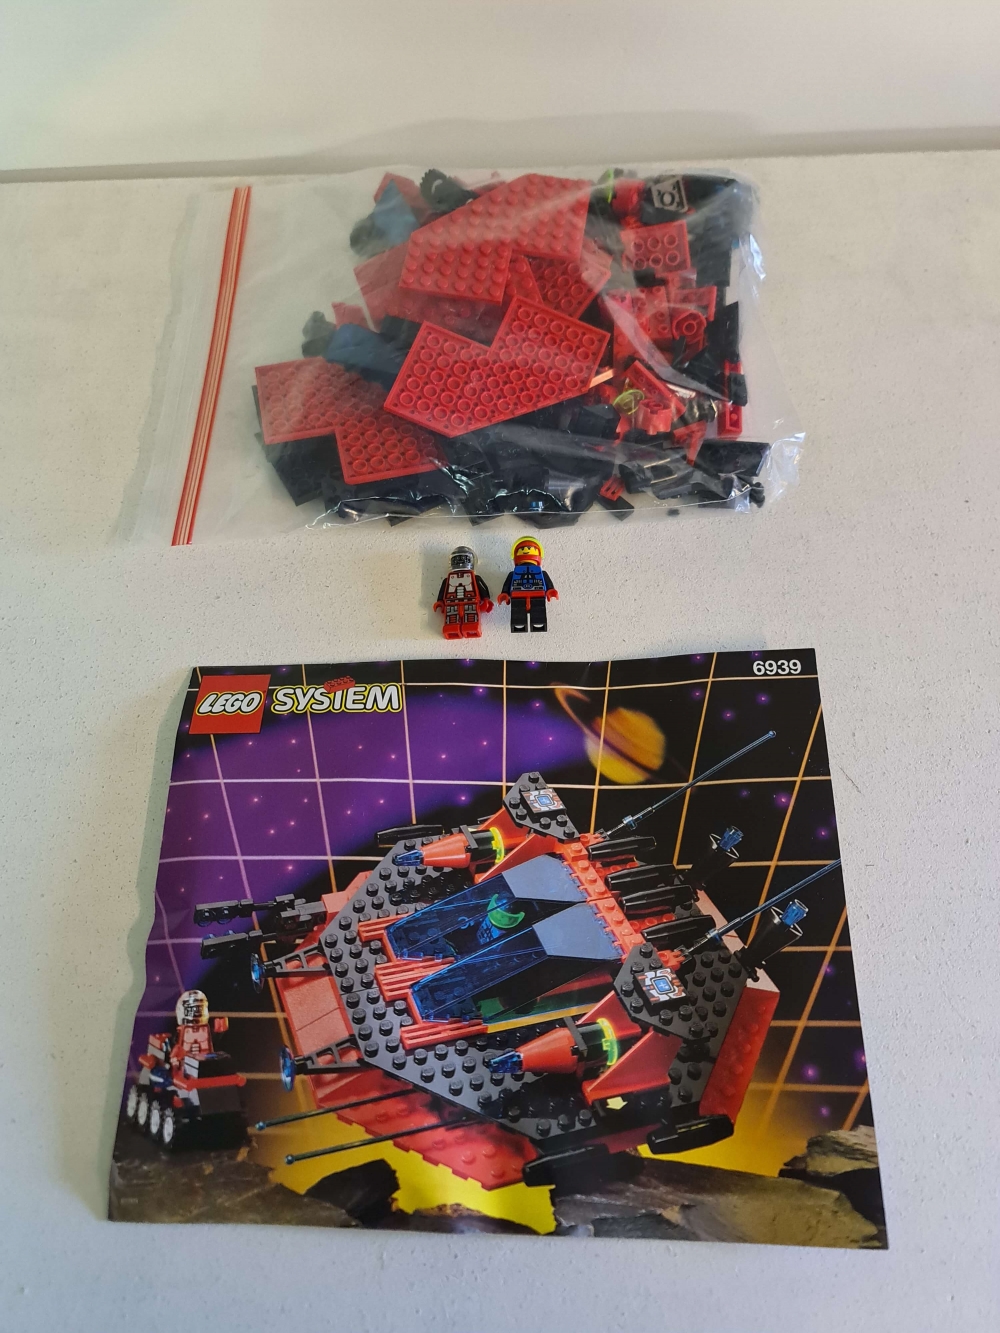 Sett 6939 fra Lego Space : Spyrius serien
Flott sett.
Komplett med manual.